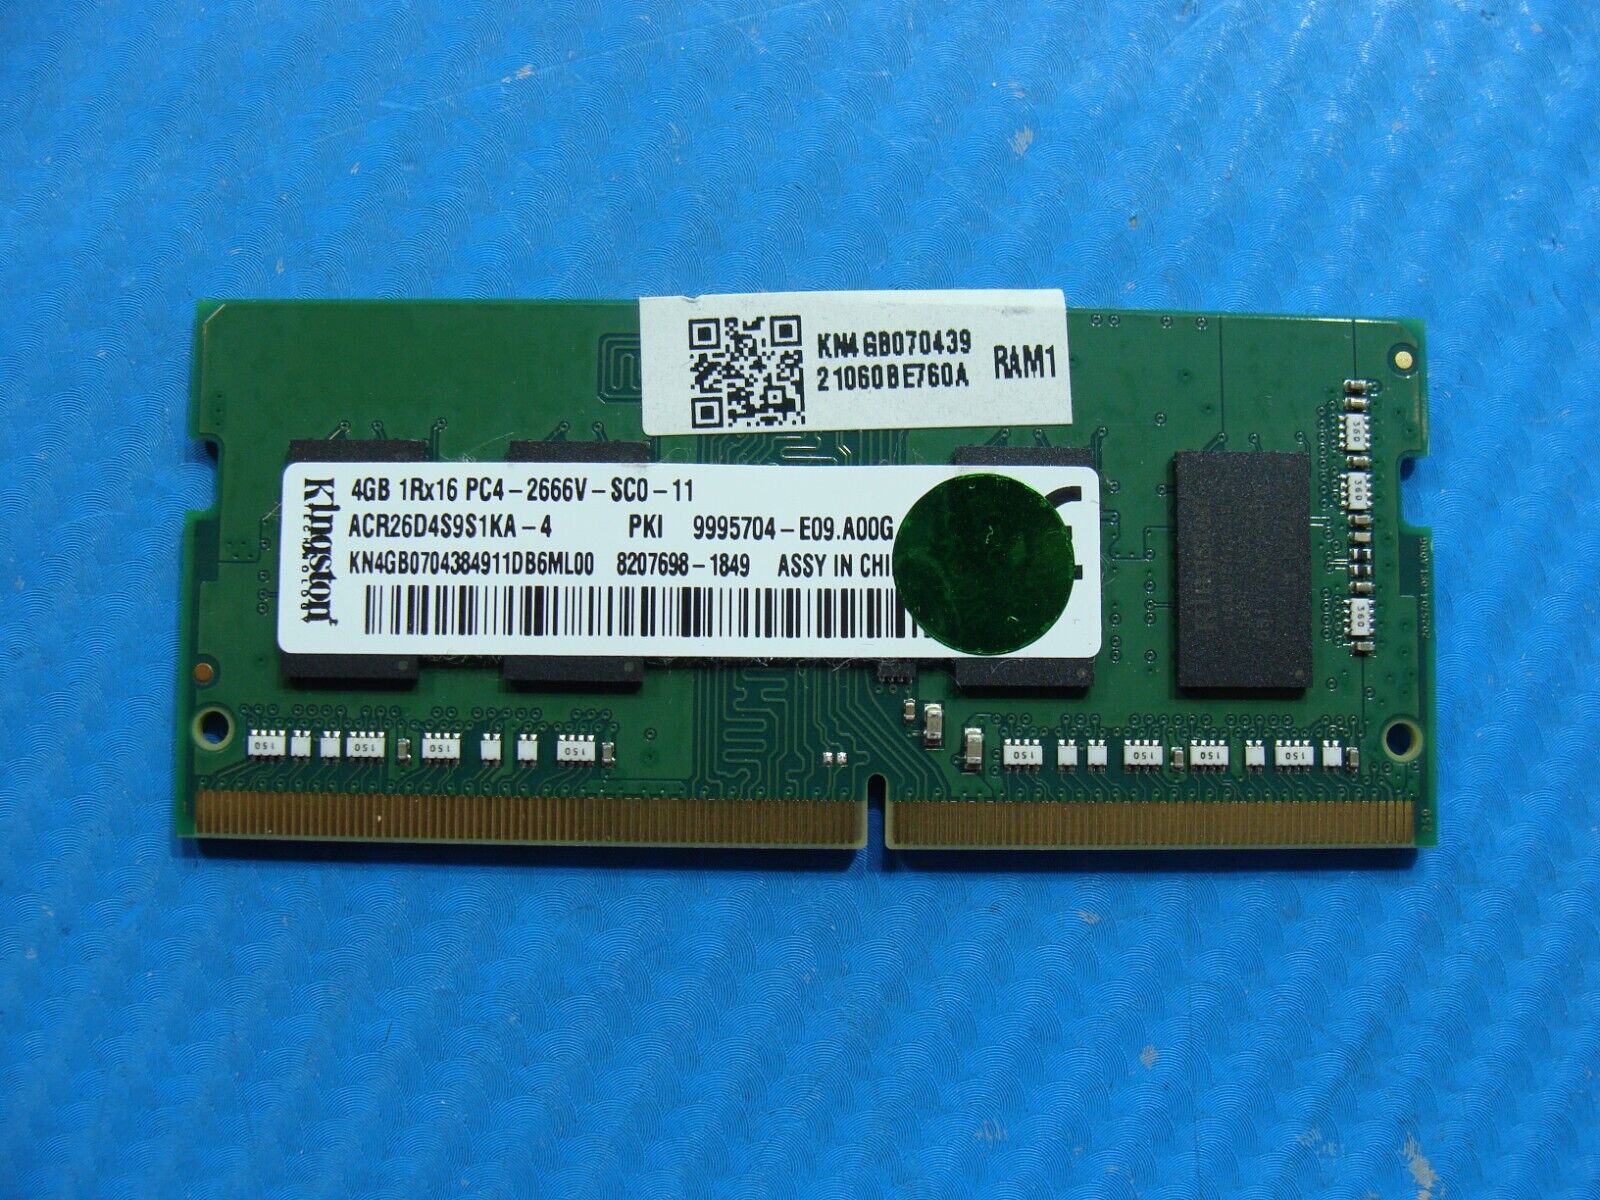 Acer A515-54 Kingston 4GB 1Rx16 PC4-2666V Memory RAM SO-DIMM ACR26D4S9S1KA-4